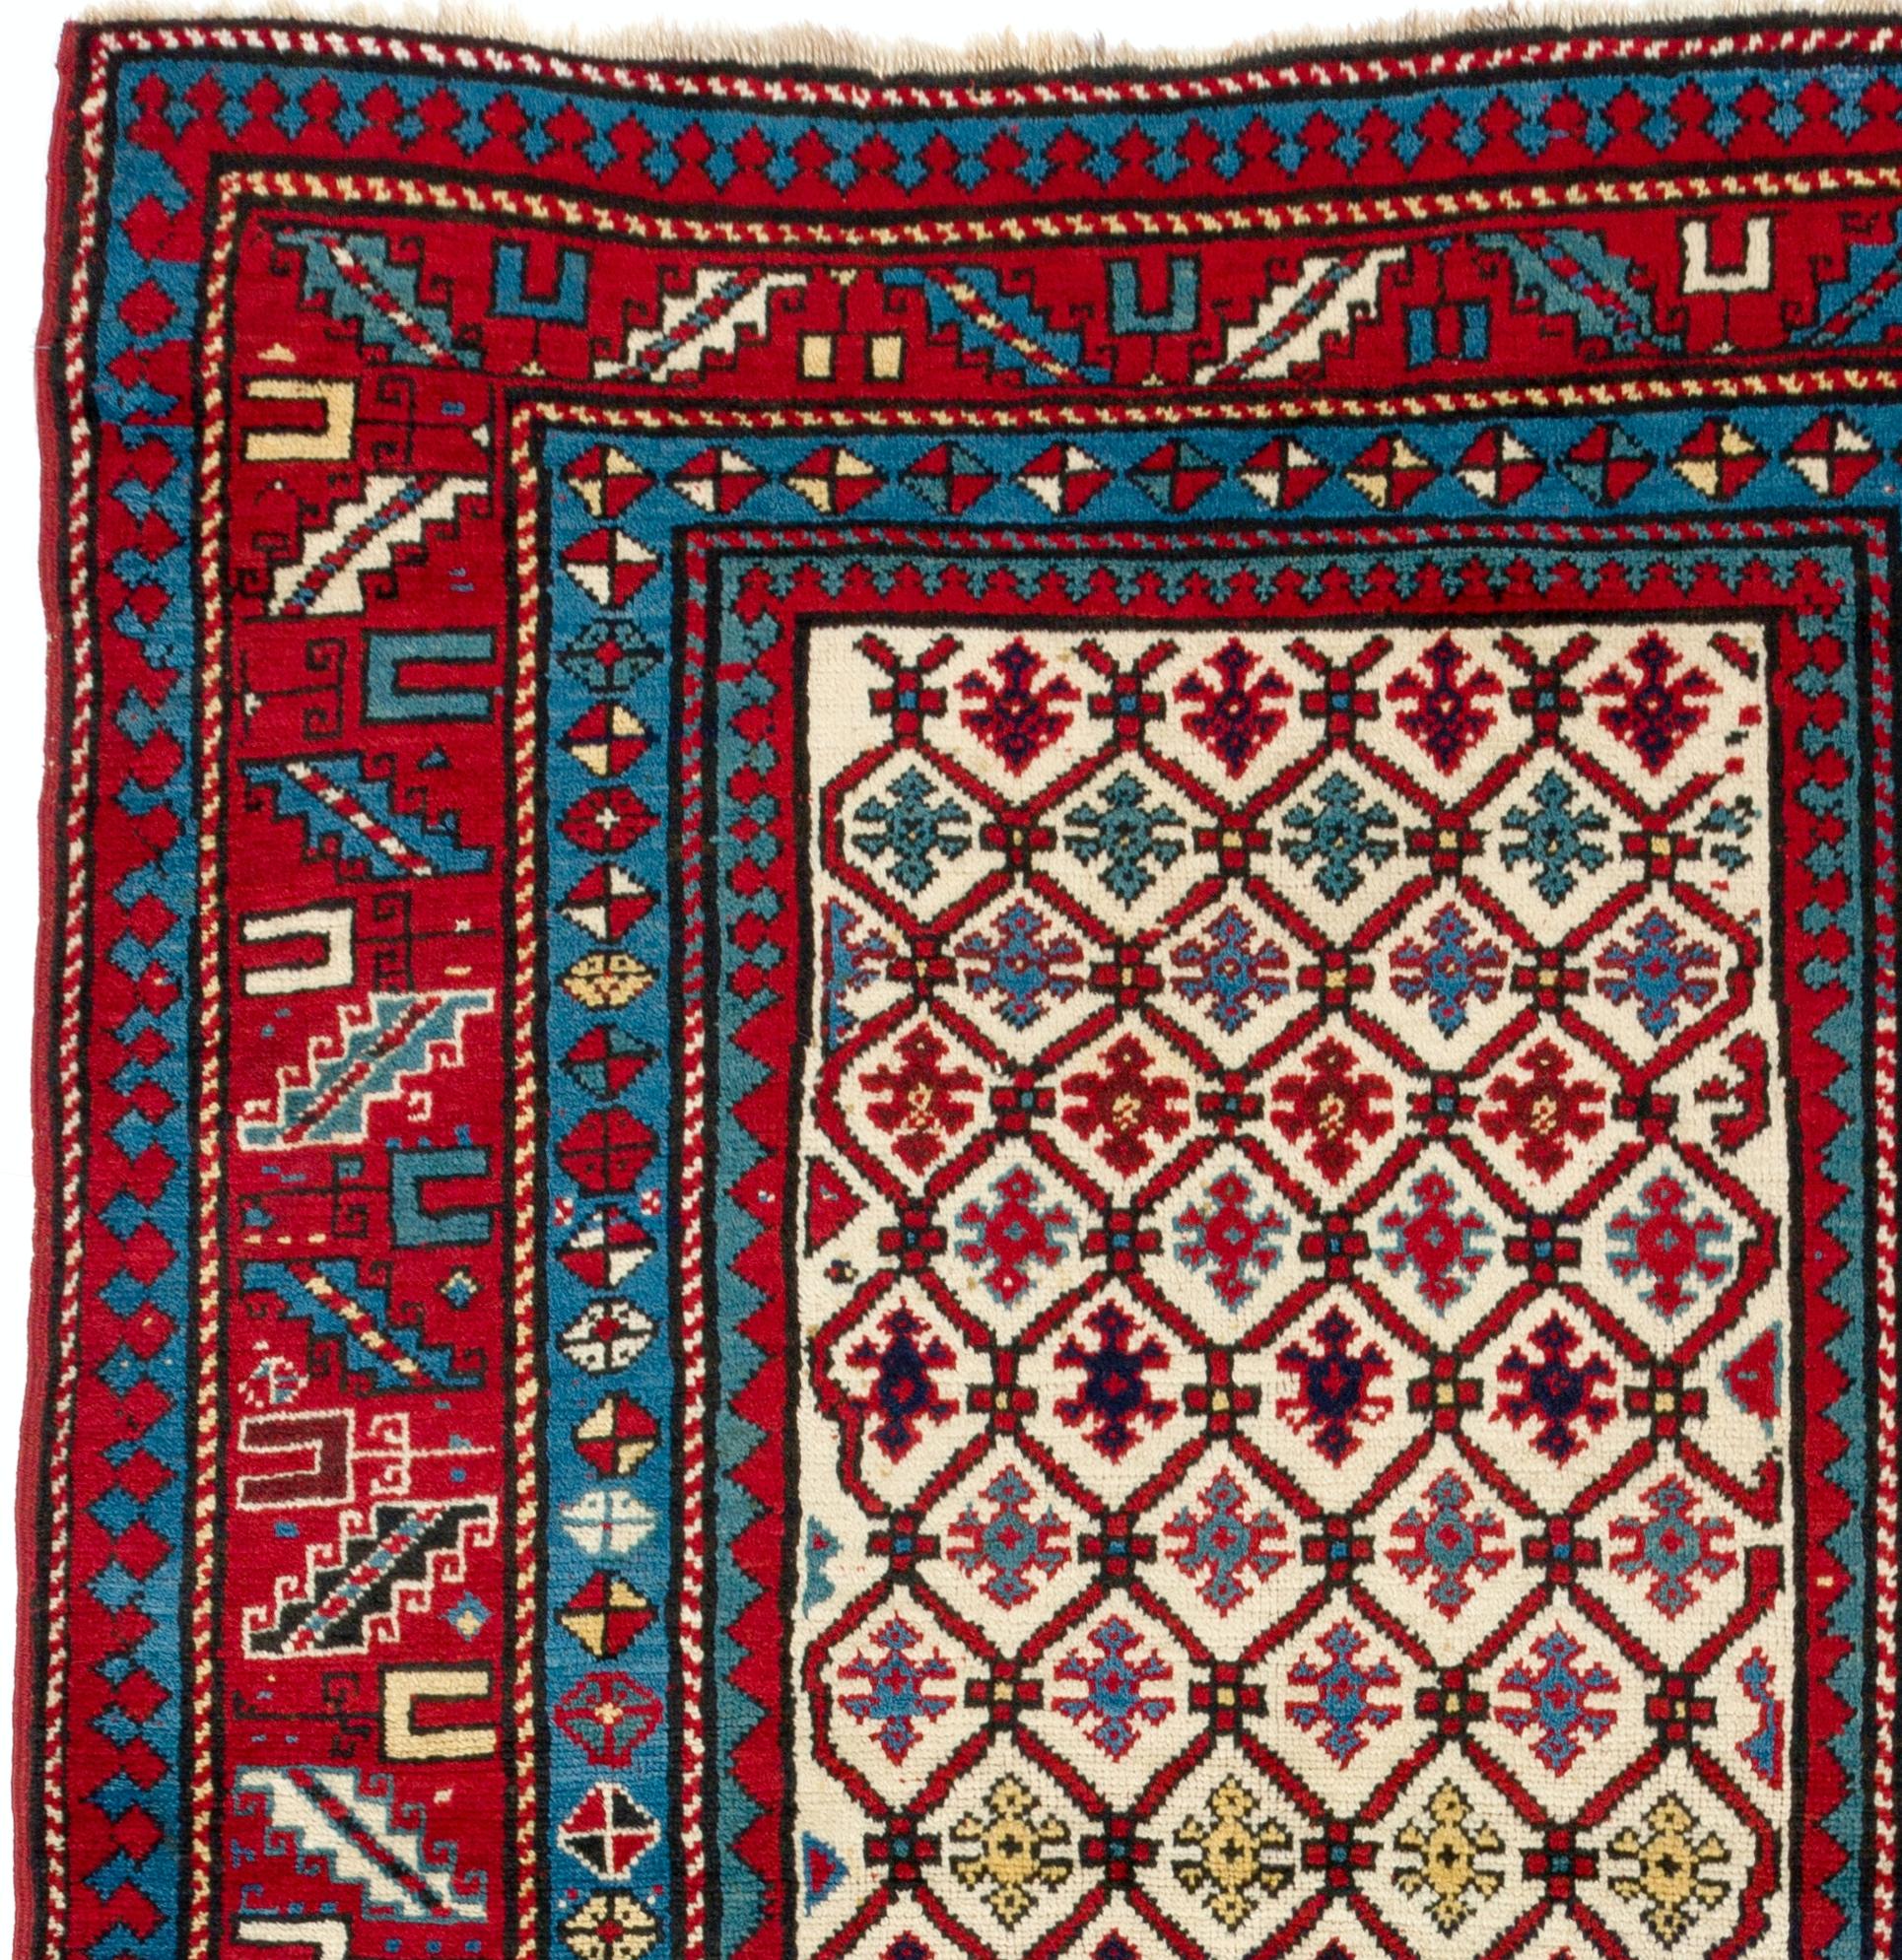 Hand-Knotted Antique Caucasian Kazak Rug, Excellent Condition, Ful Pile, All Original For Sale